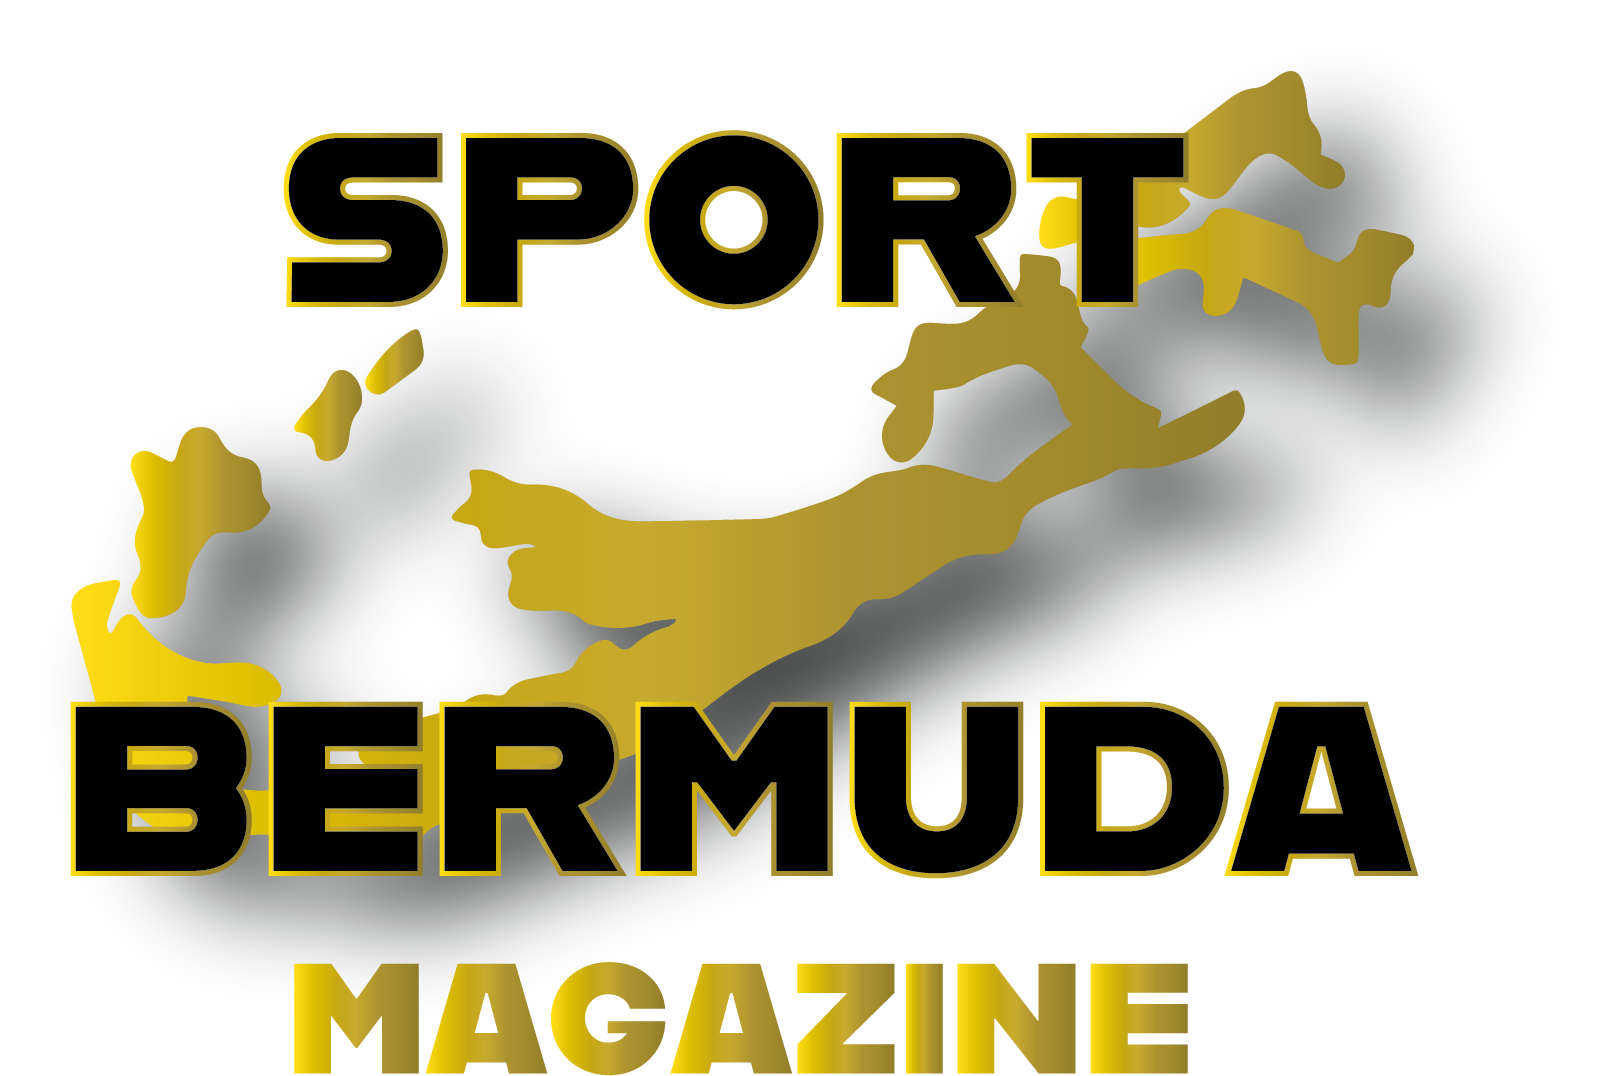 Sportbermudamagazine